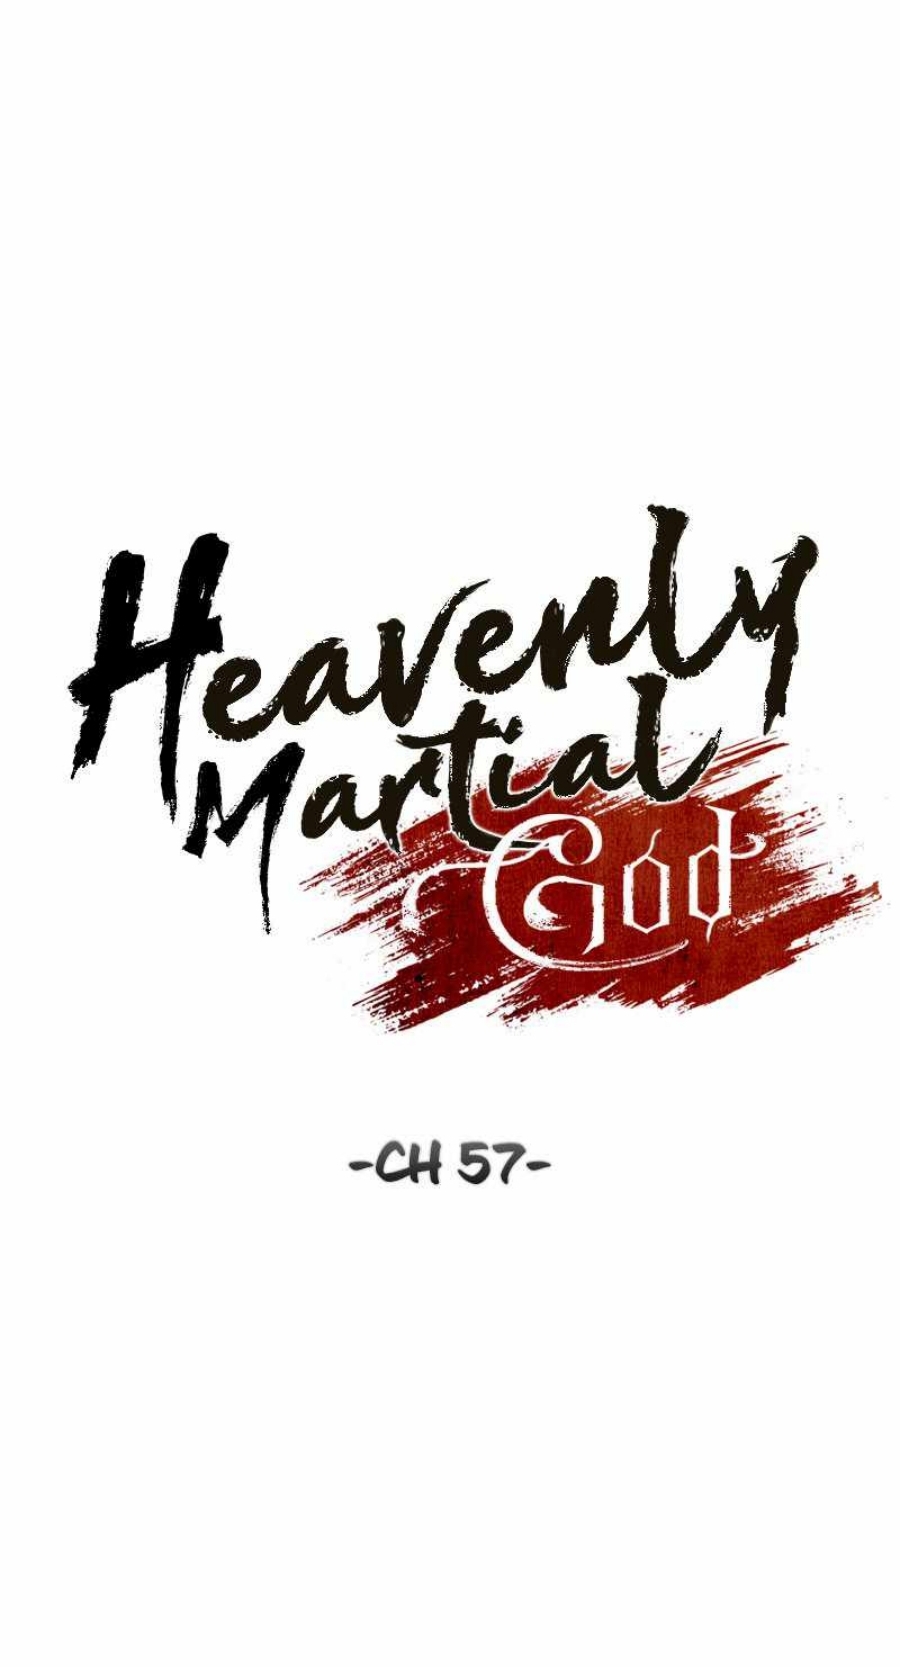 Heavenly martial god 57 (18)